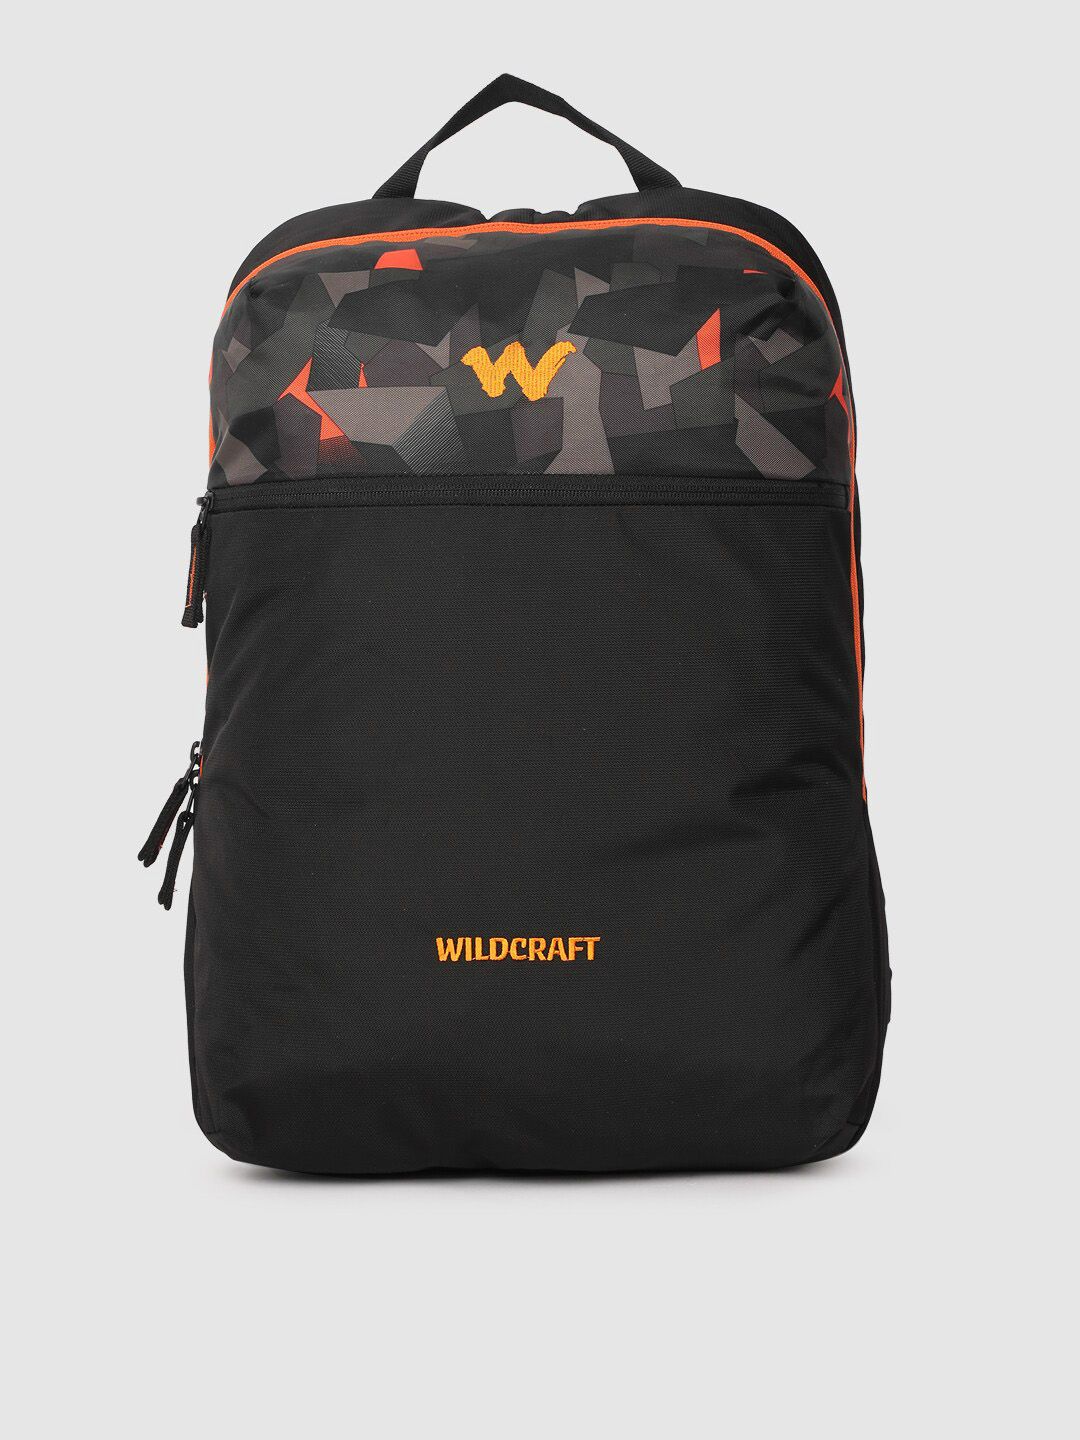 Wildcraft Unisex Black Rider Backpack Price in India